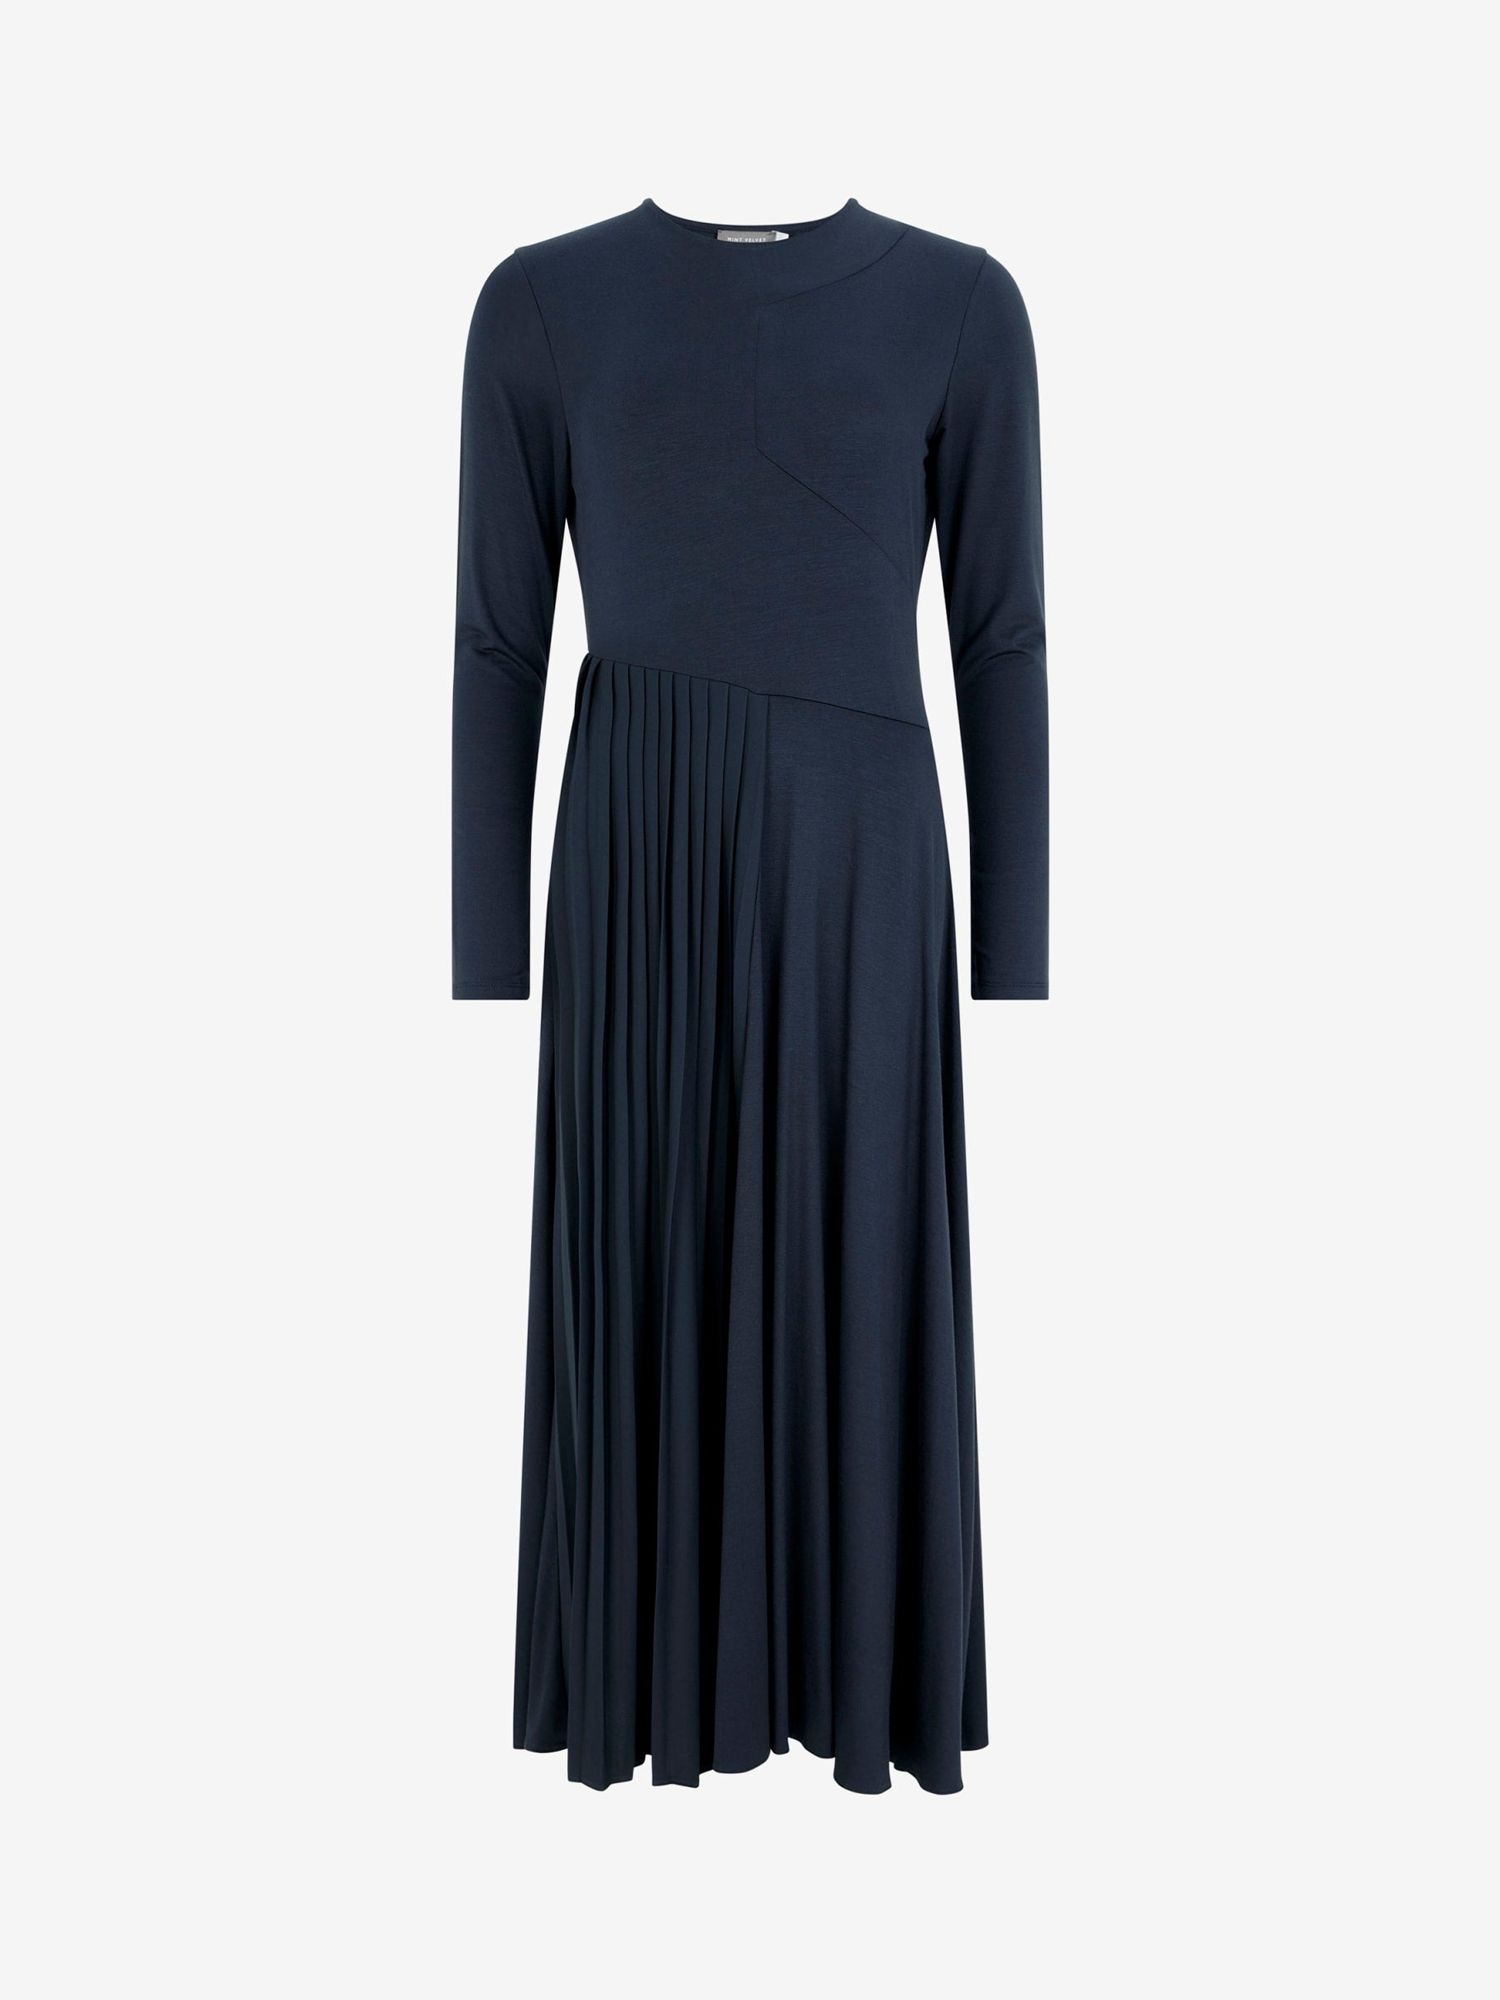 Mint Velvet Jersey Midi Dress, Dark Blue, L